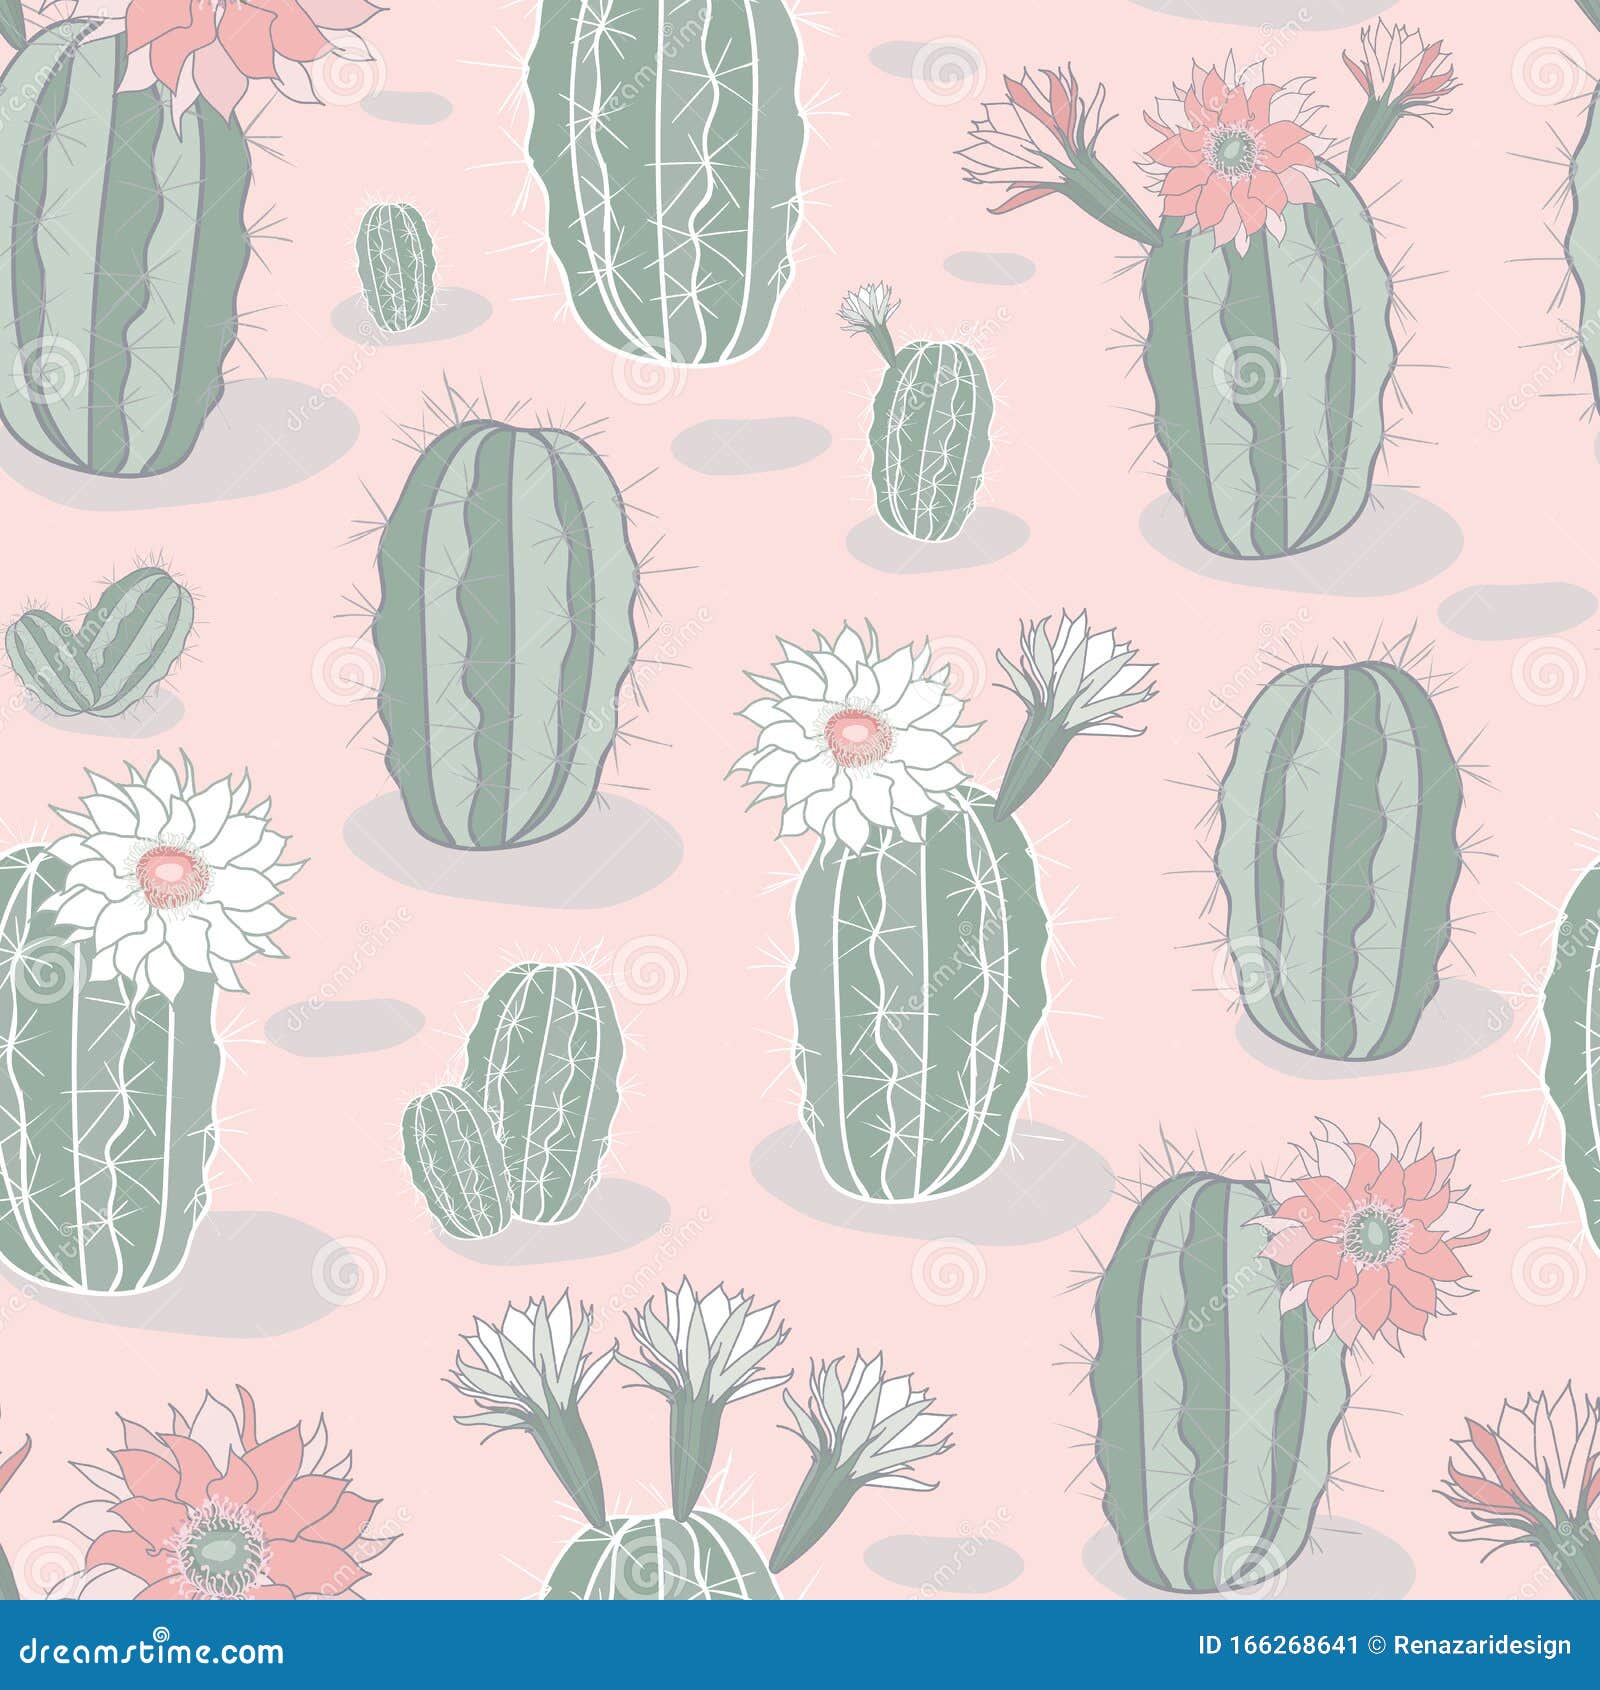 Top 100+ imagen fondos de pantalla de cactus 